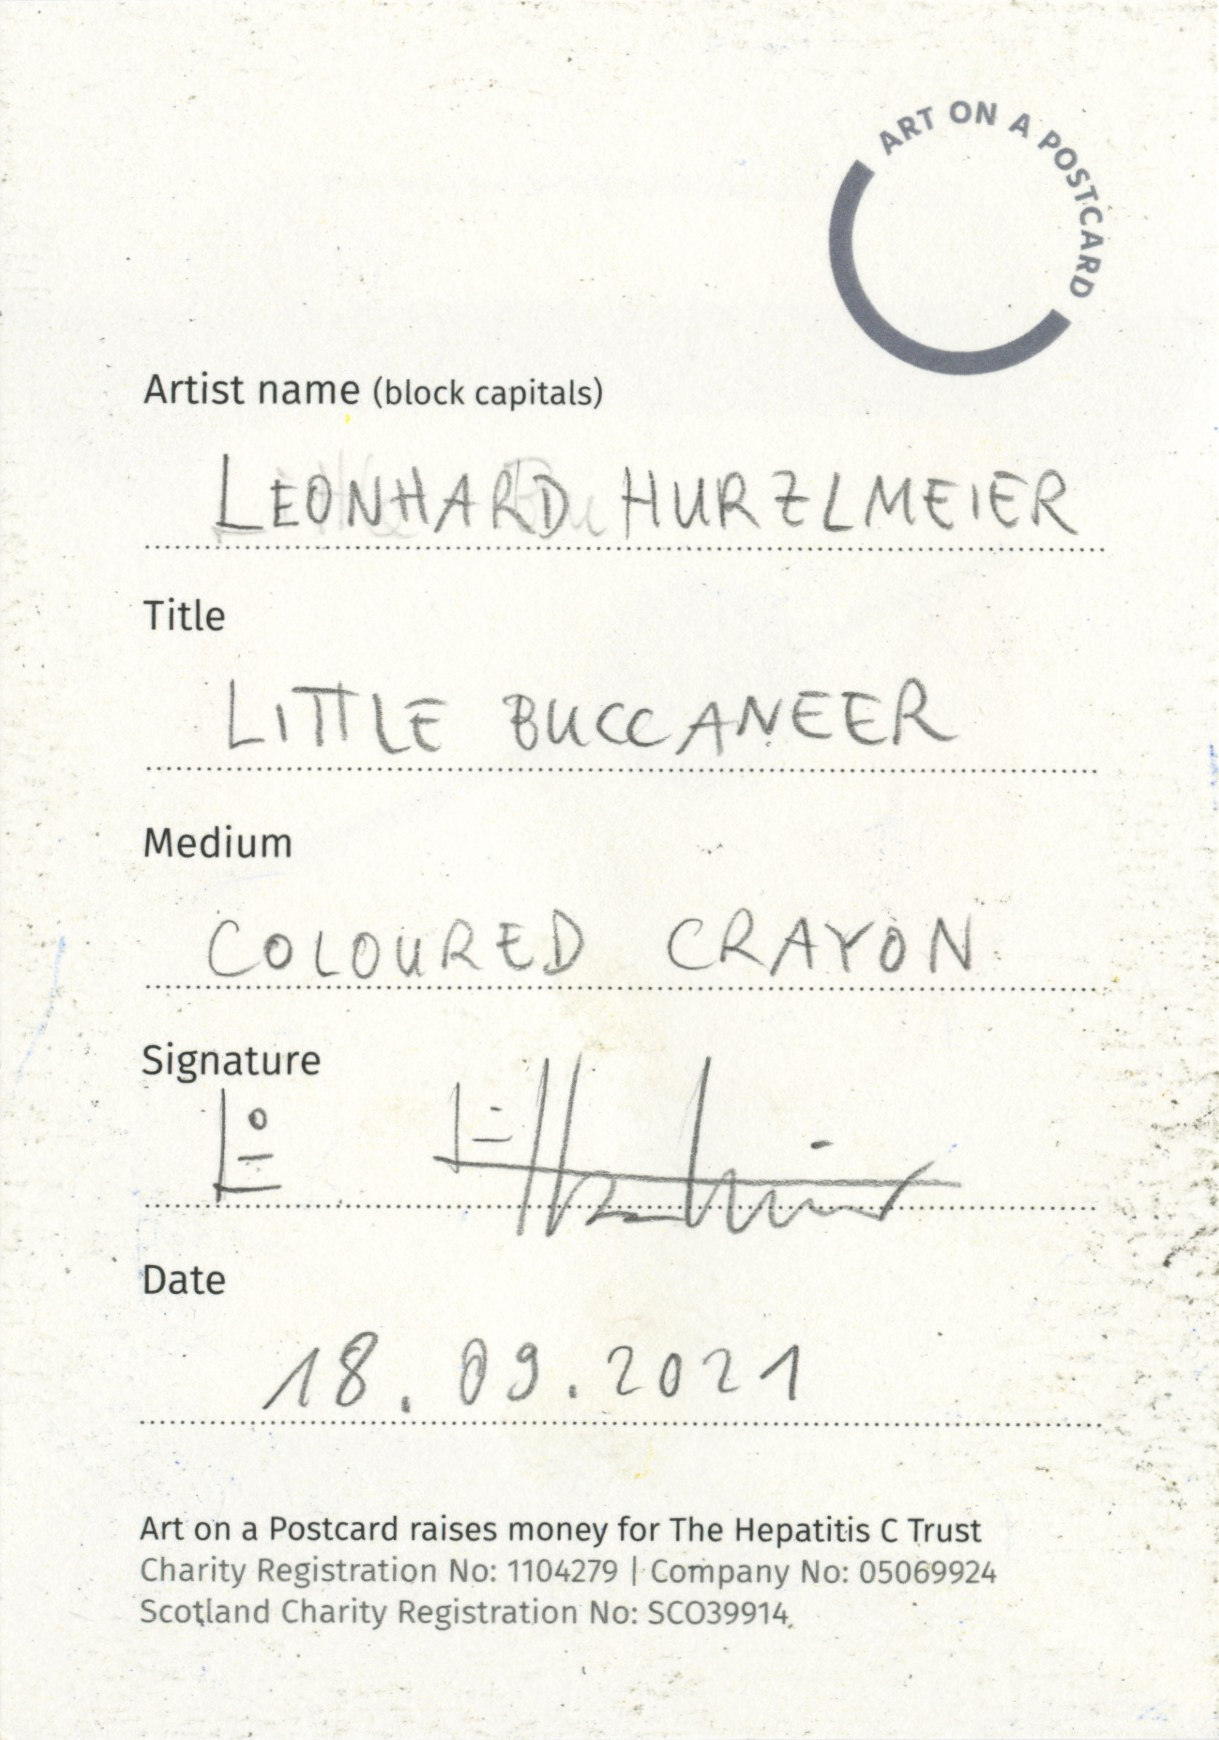 LITTLE BUCCANEER - back